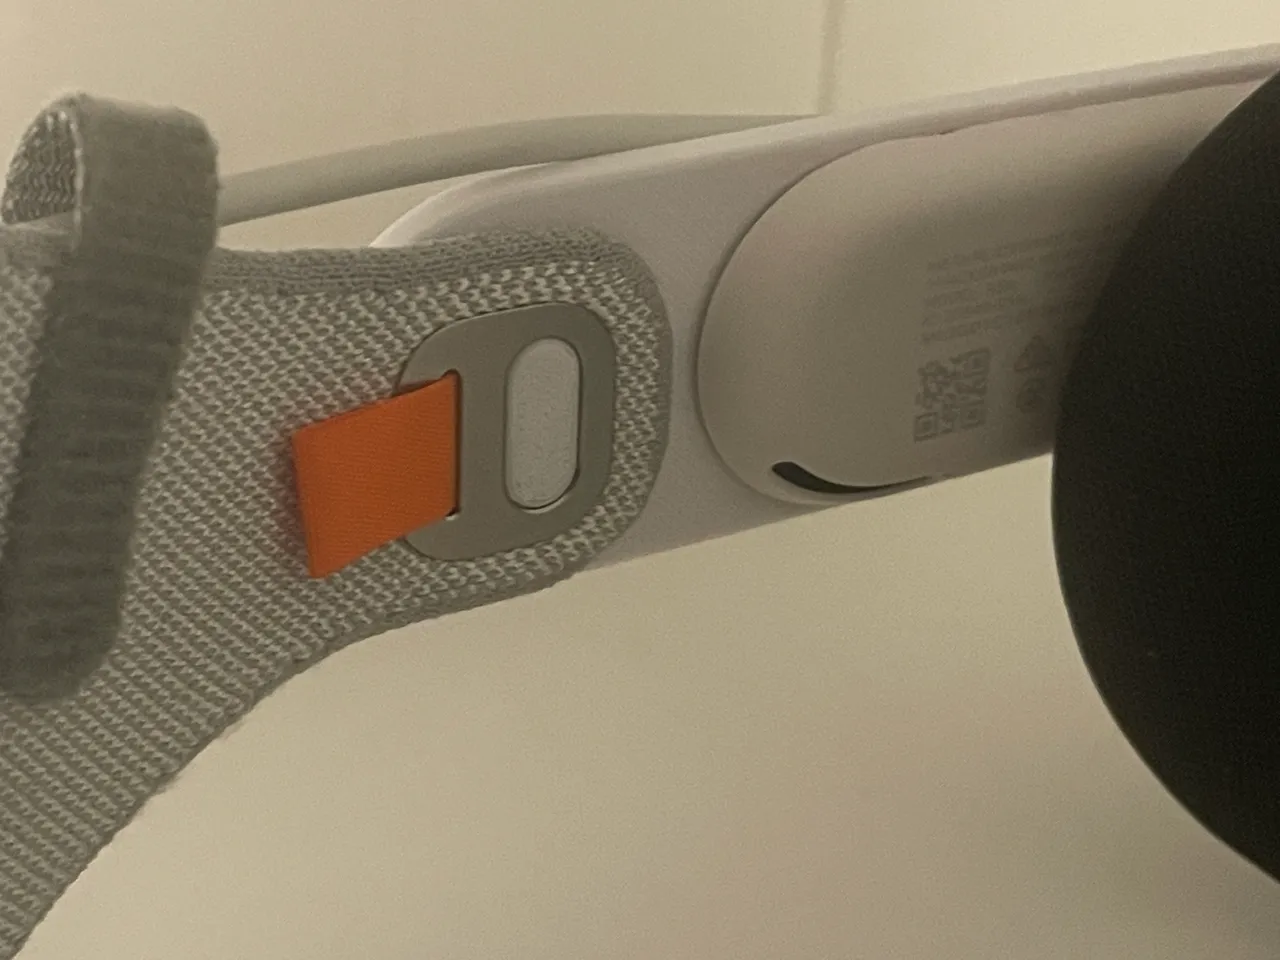 Excellent fix for Elite strap breaking. : r/OculusQuest2